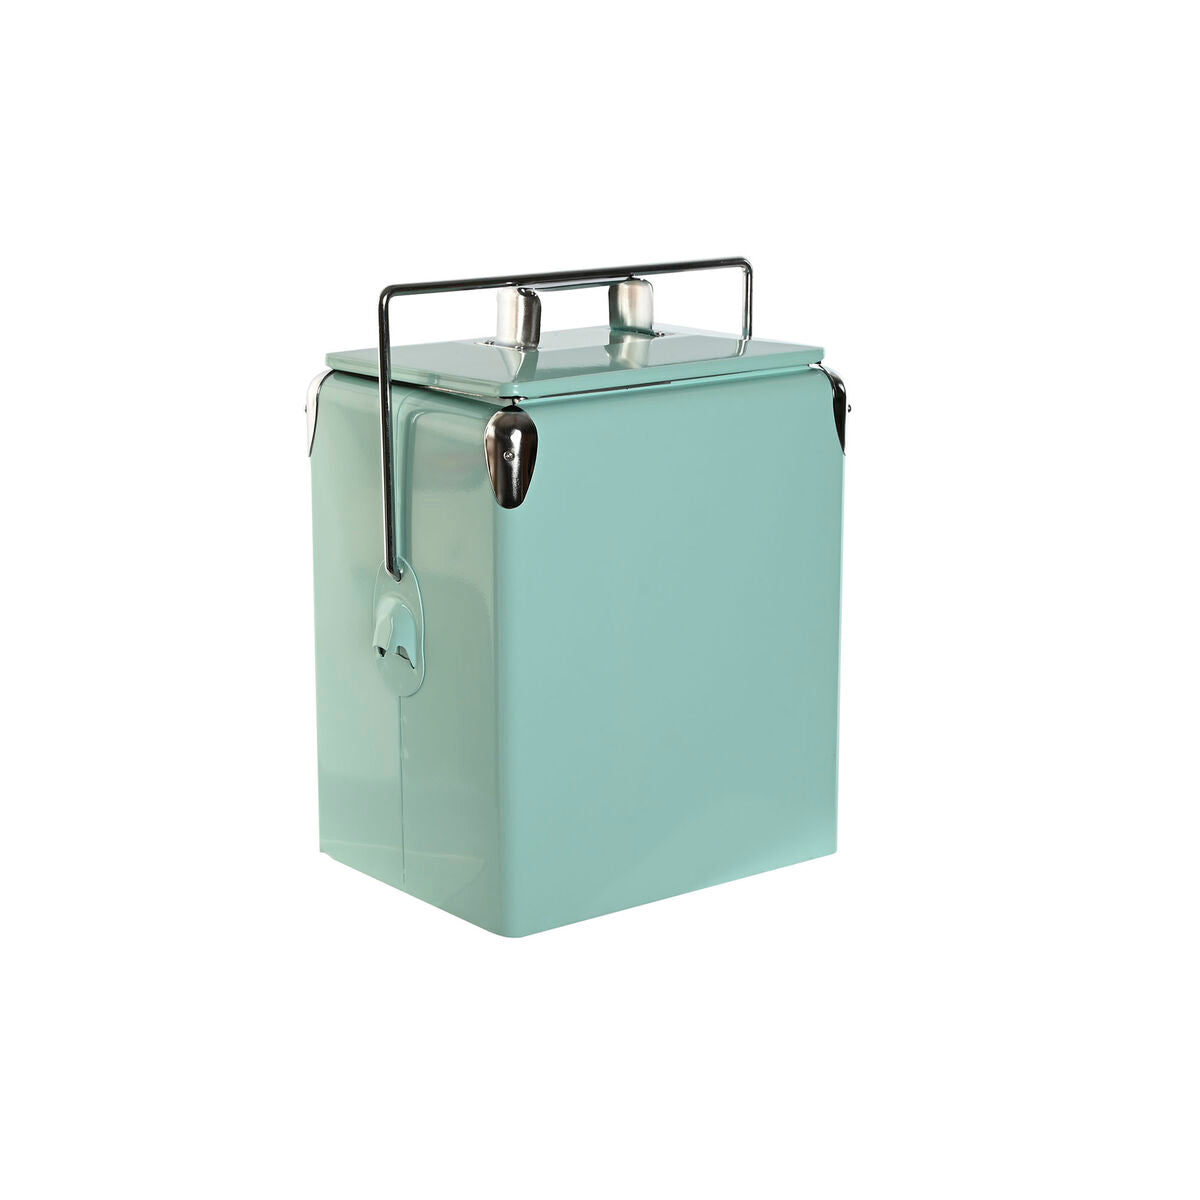 Tragbarer Kühlschrank Home ESPRIT grün PVC Metall Stahl Polypropylen 17 L 32 x 24 x 43 cm